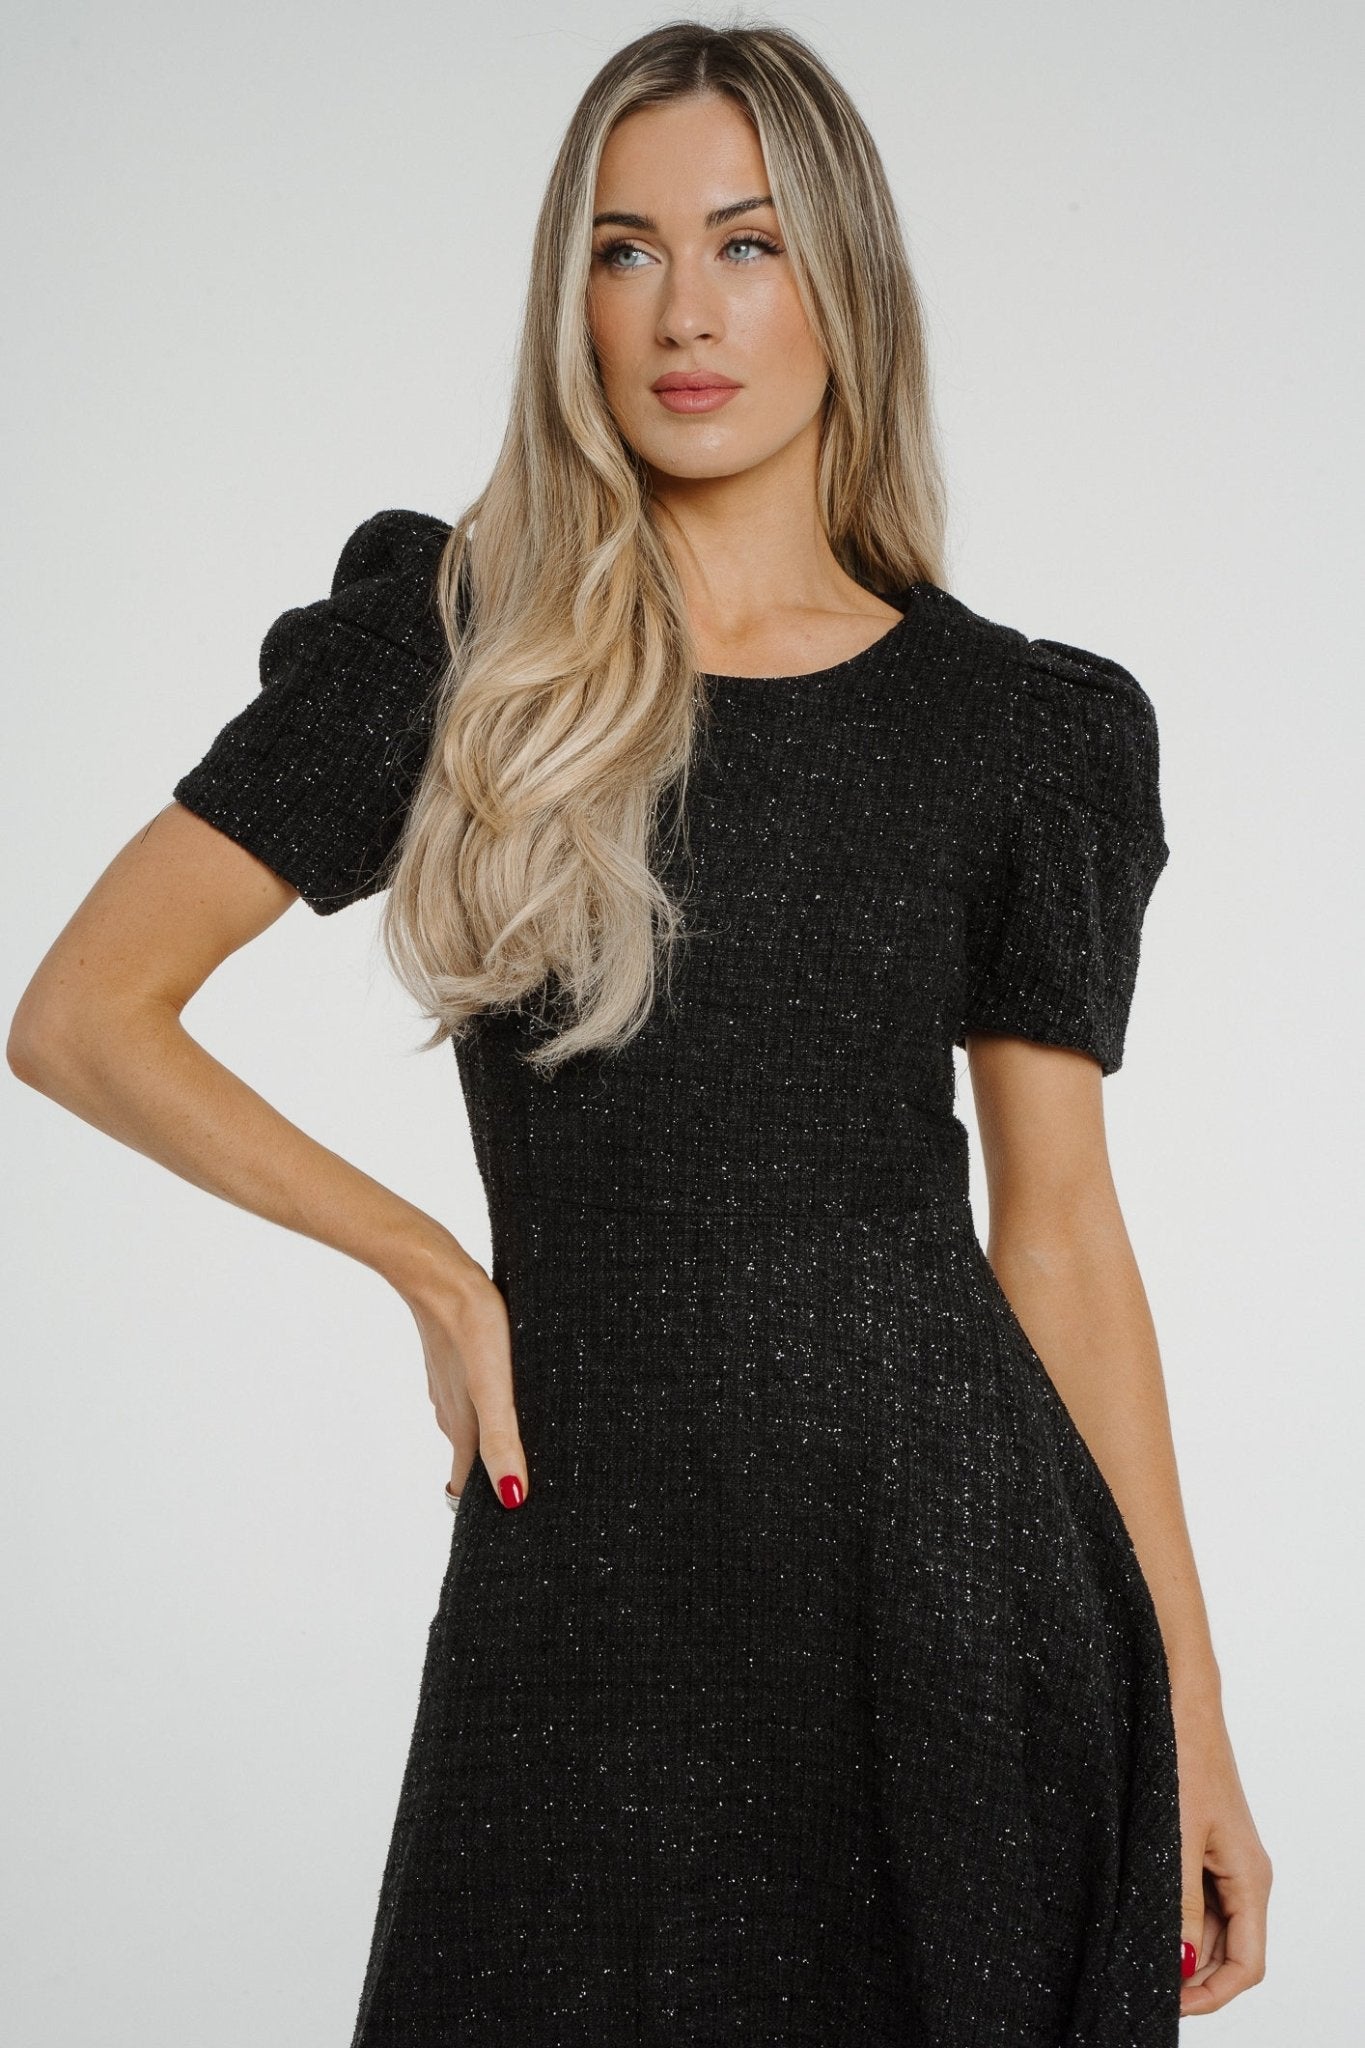 Paige Sparkle Tweed Dress In Black - The Walk in Wardrobe